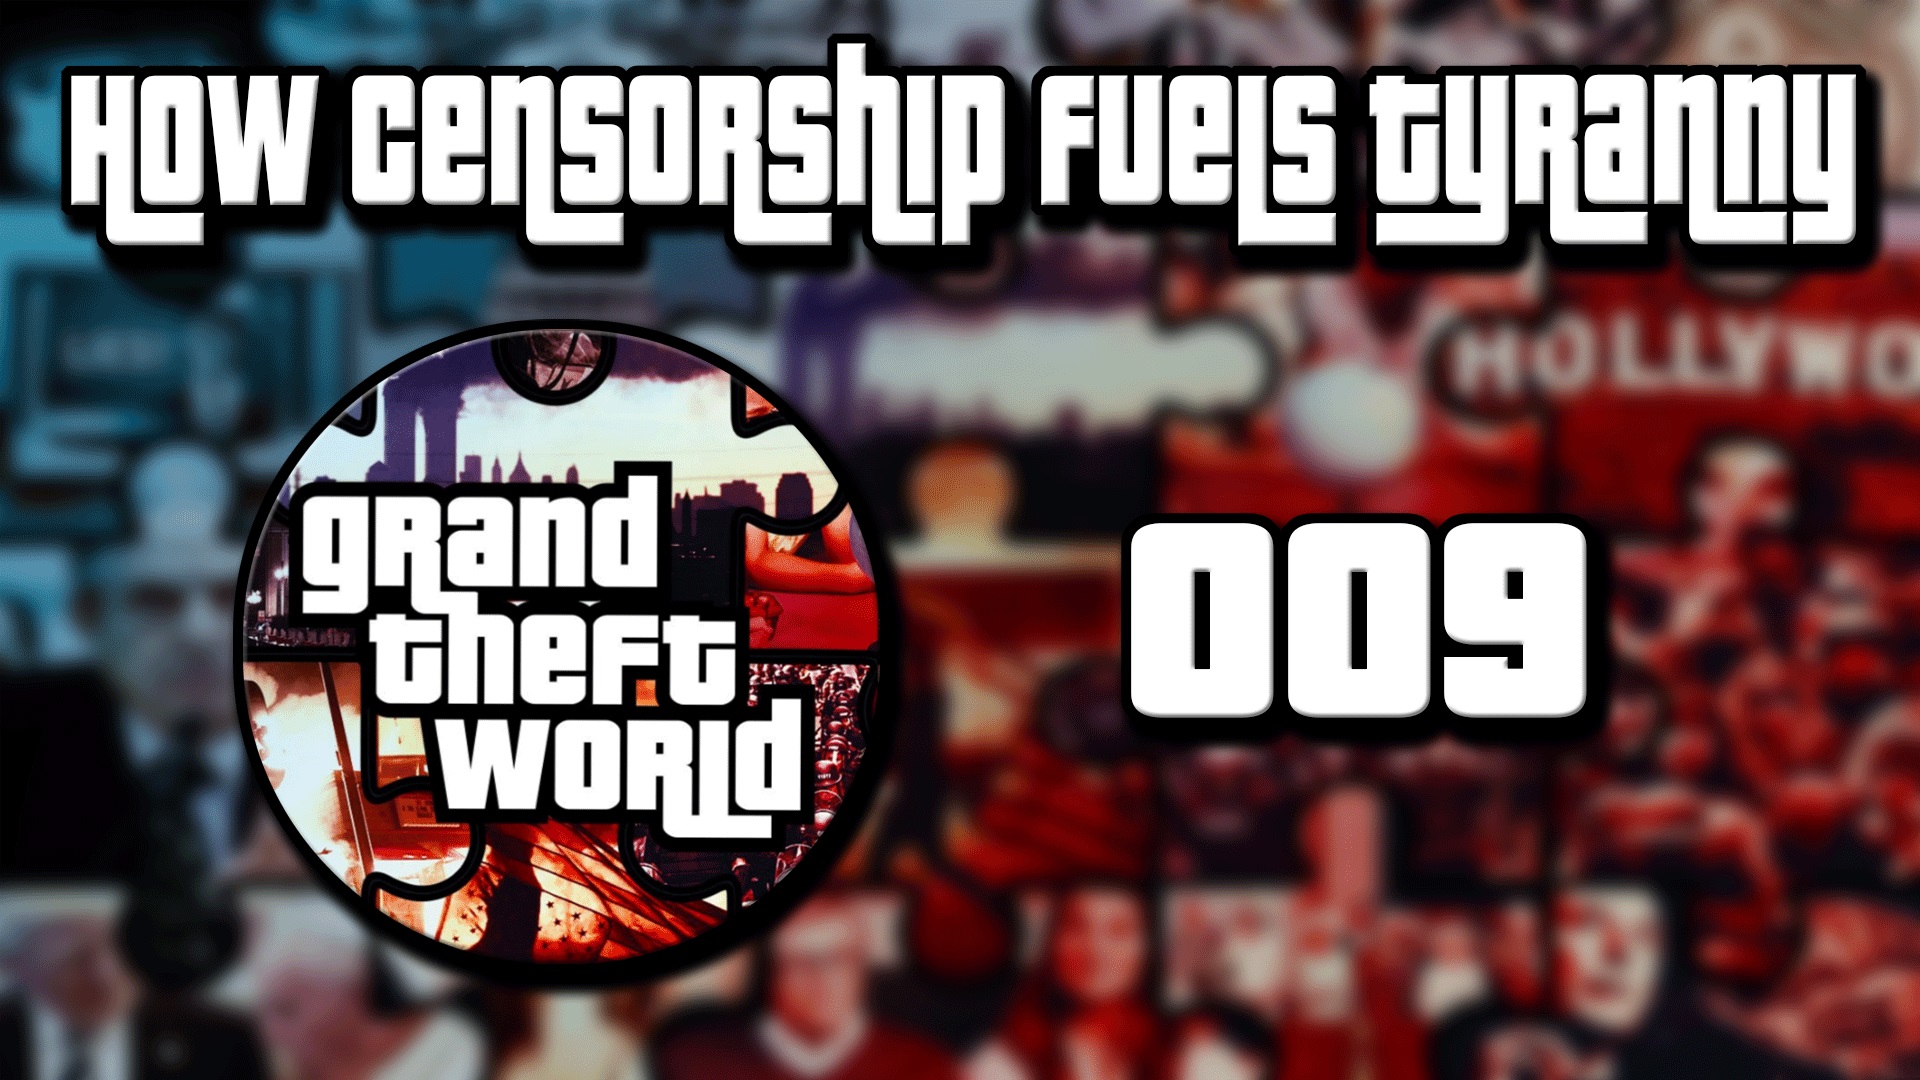 Grand Theft World Podcast 009 | How CENSORSHIP Fuels Tyranny